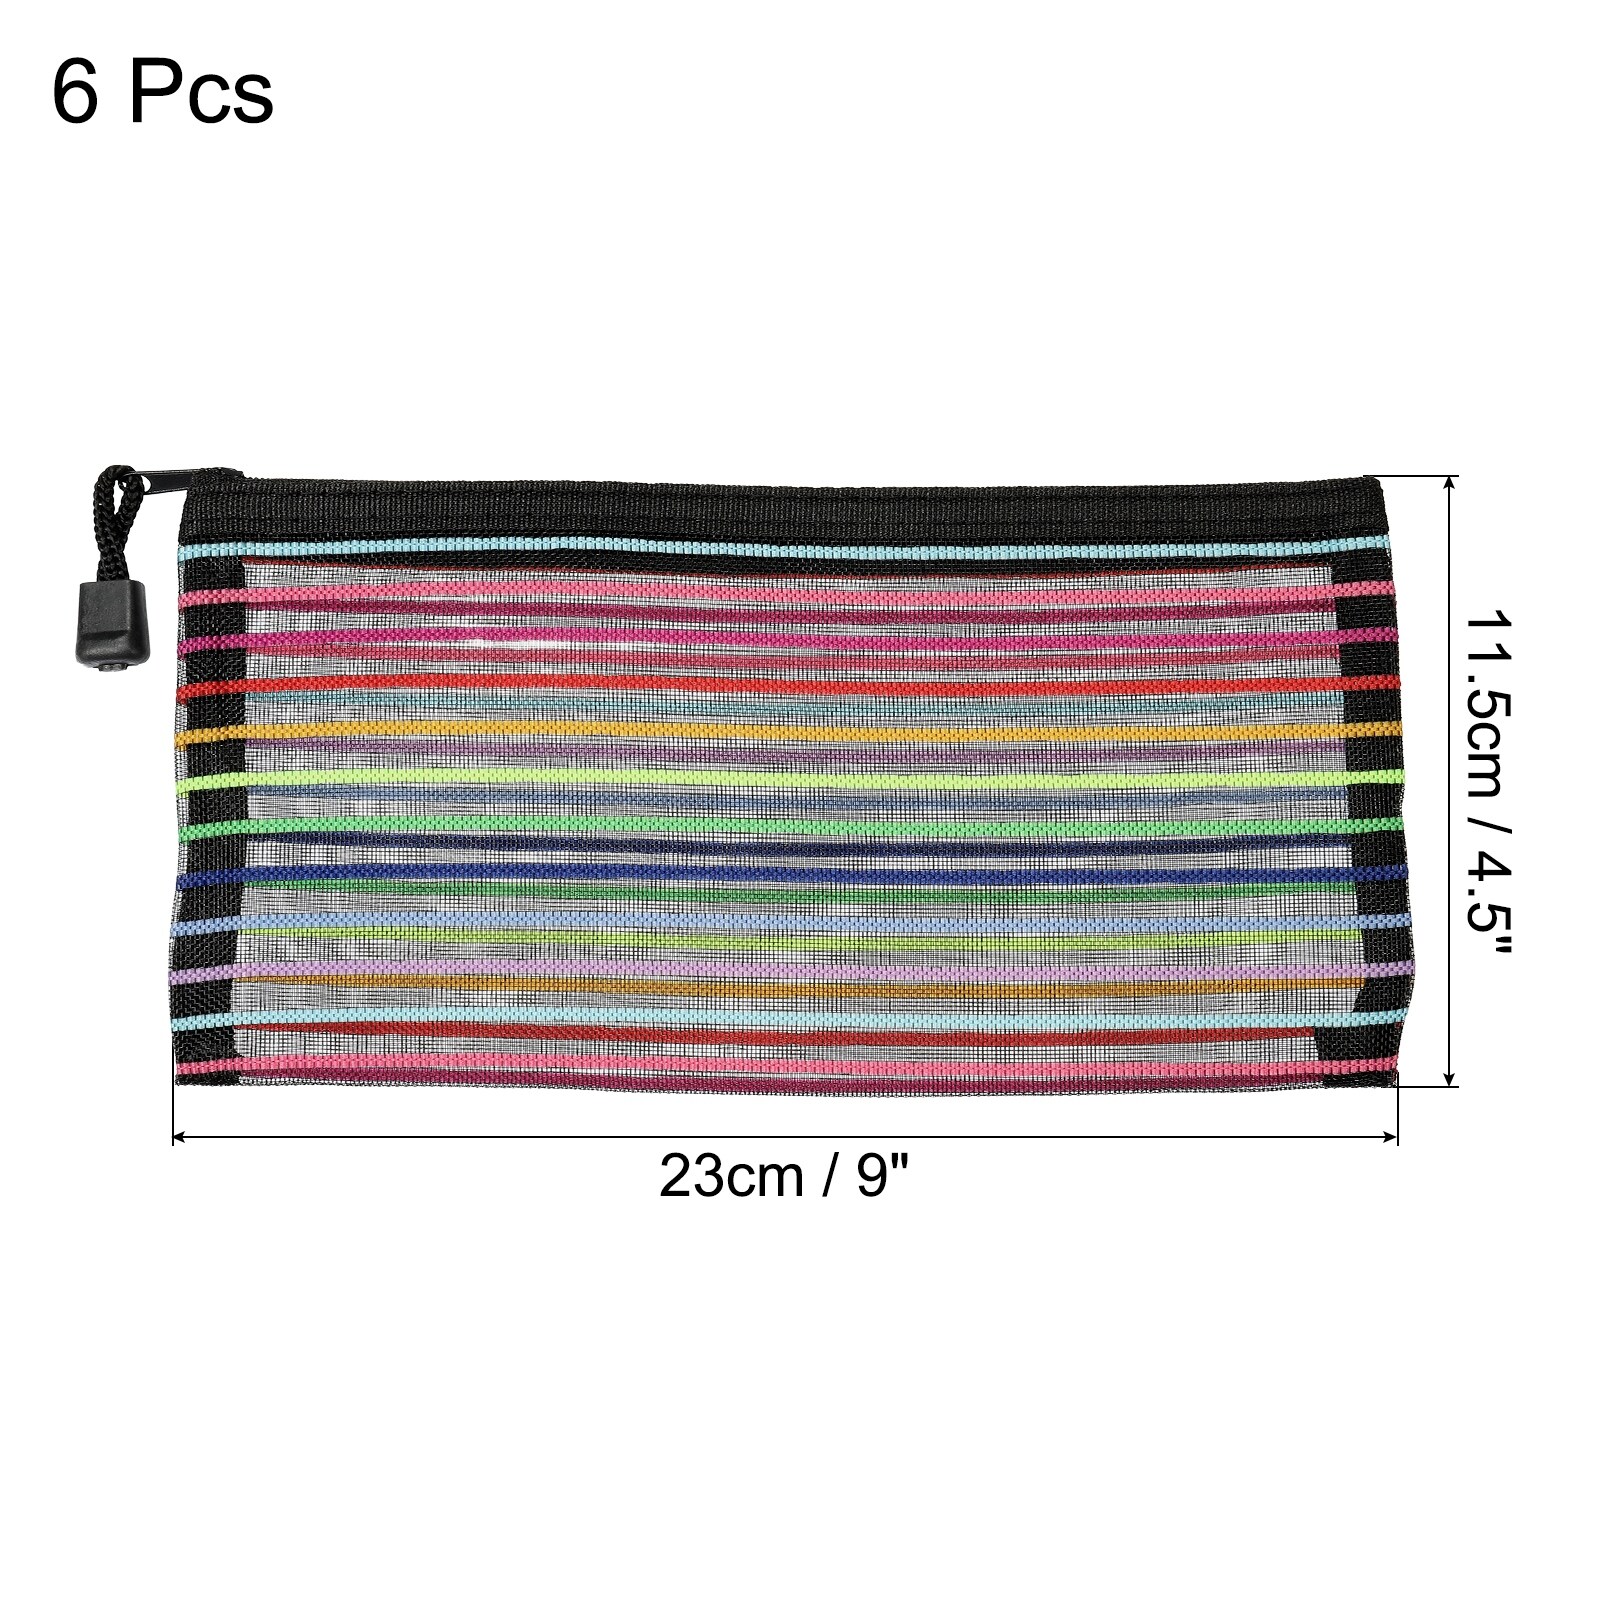 Mesh Zipper Pouch, 6 PCS 3 Sizes, A4 A5 A6 Zipper Bags Clear